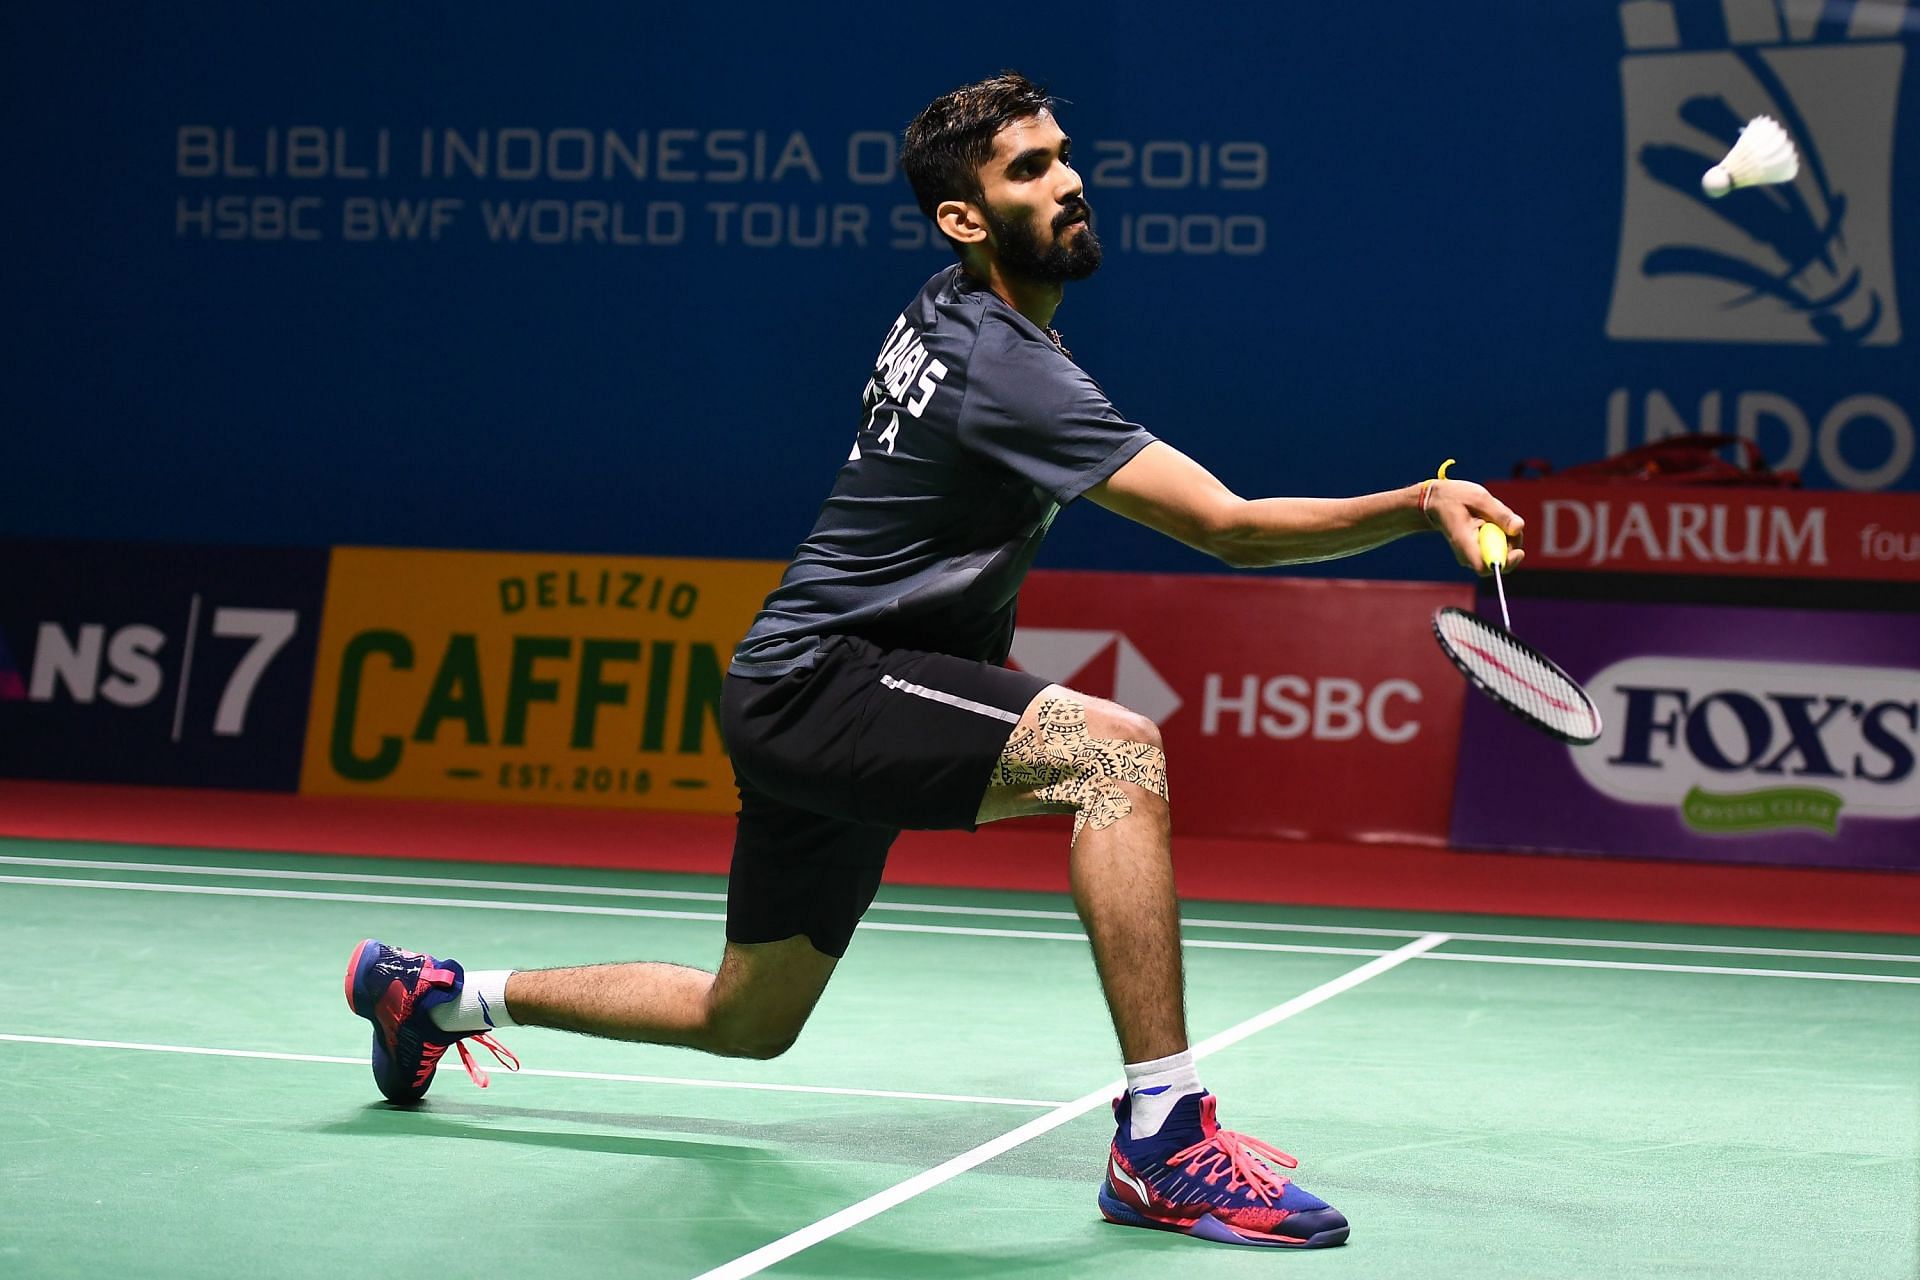 Kidambi Srikanth in action at the Bli Bli Indonesia Open